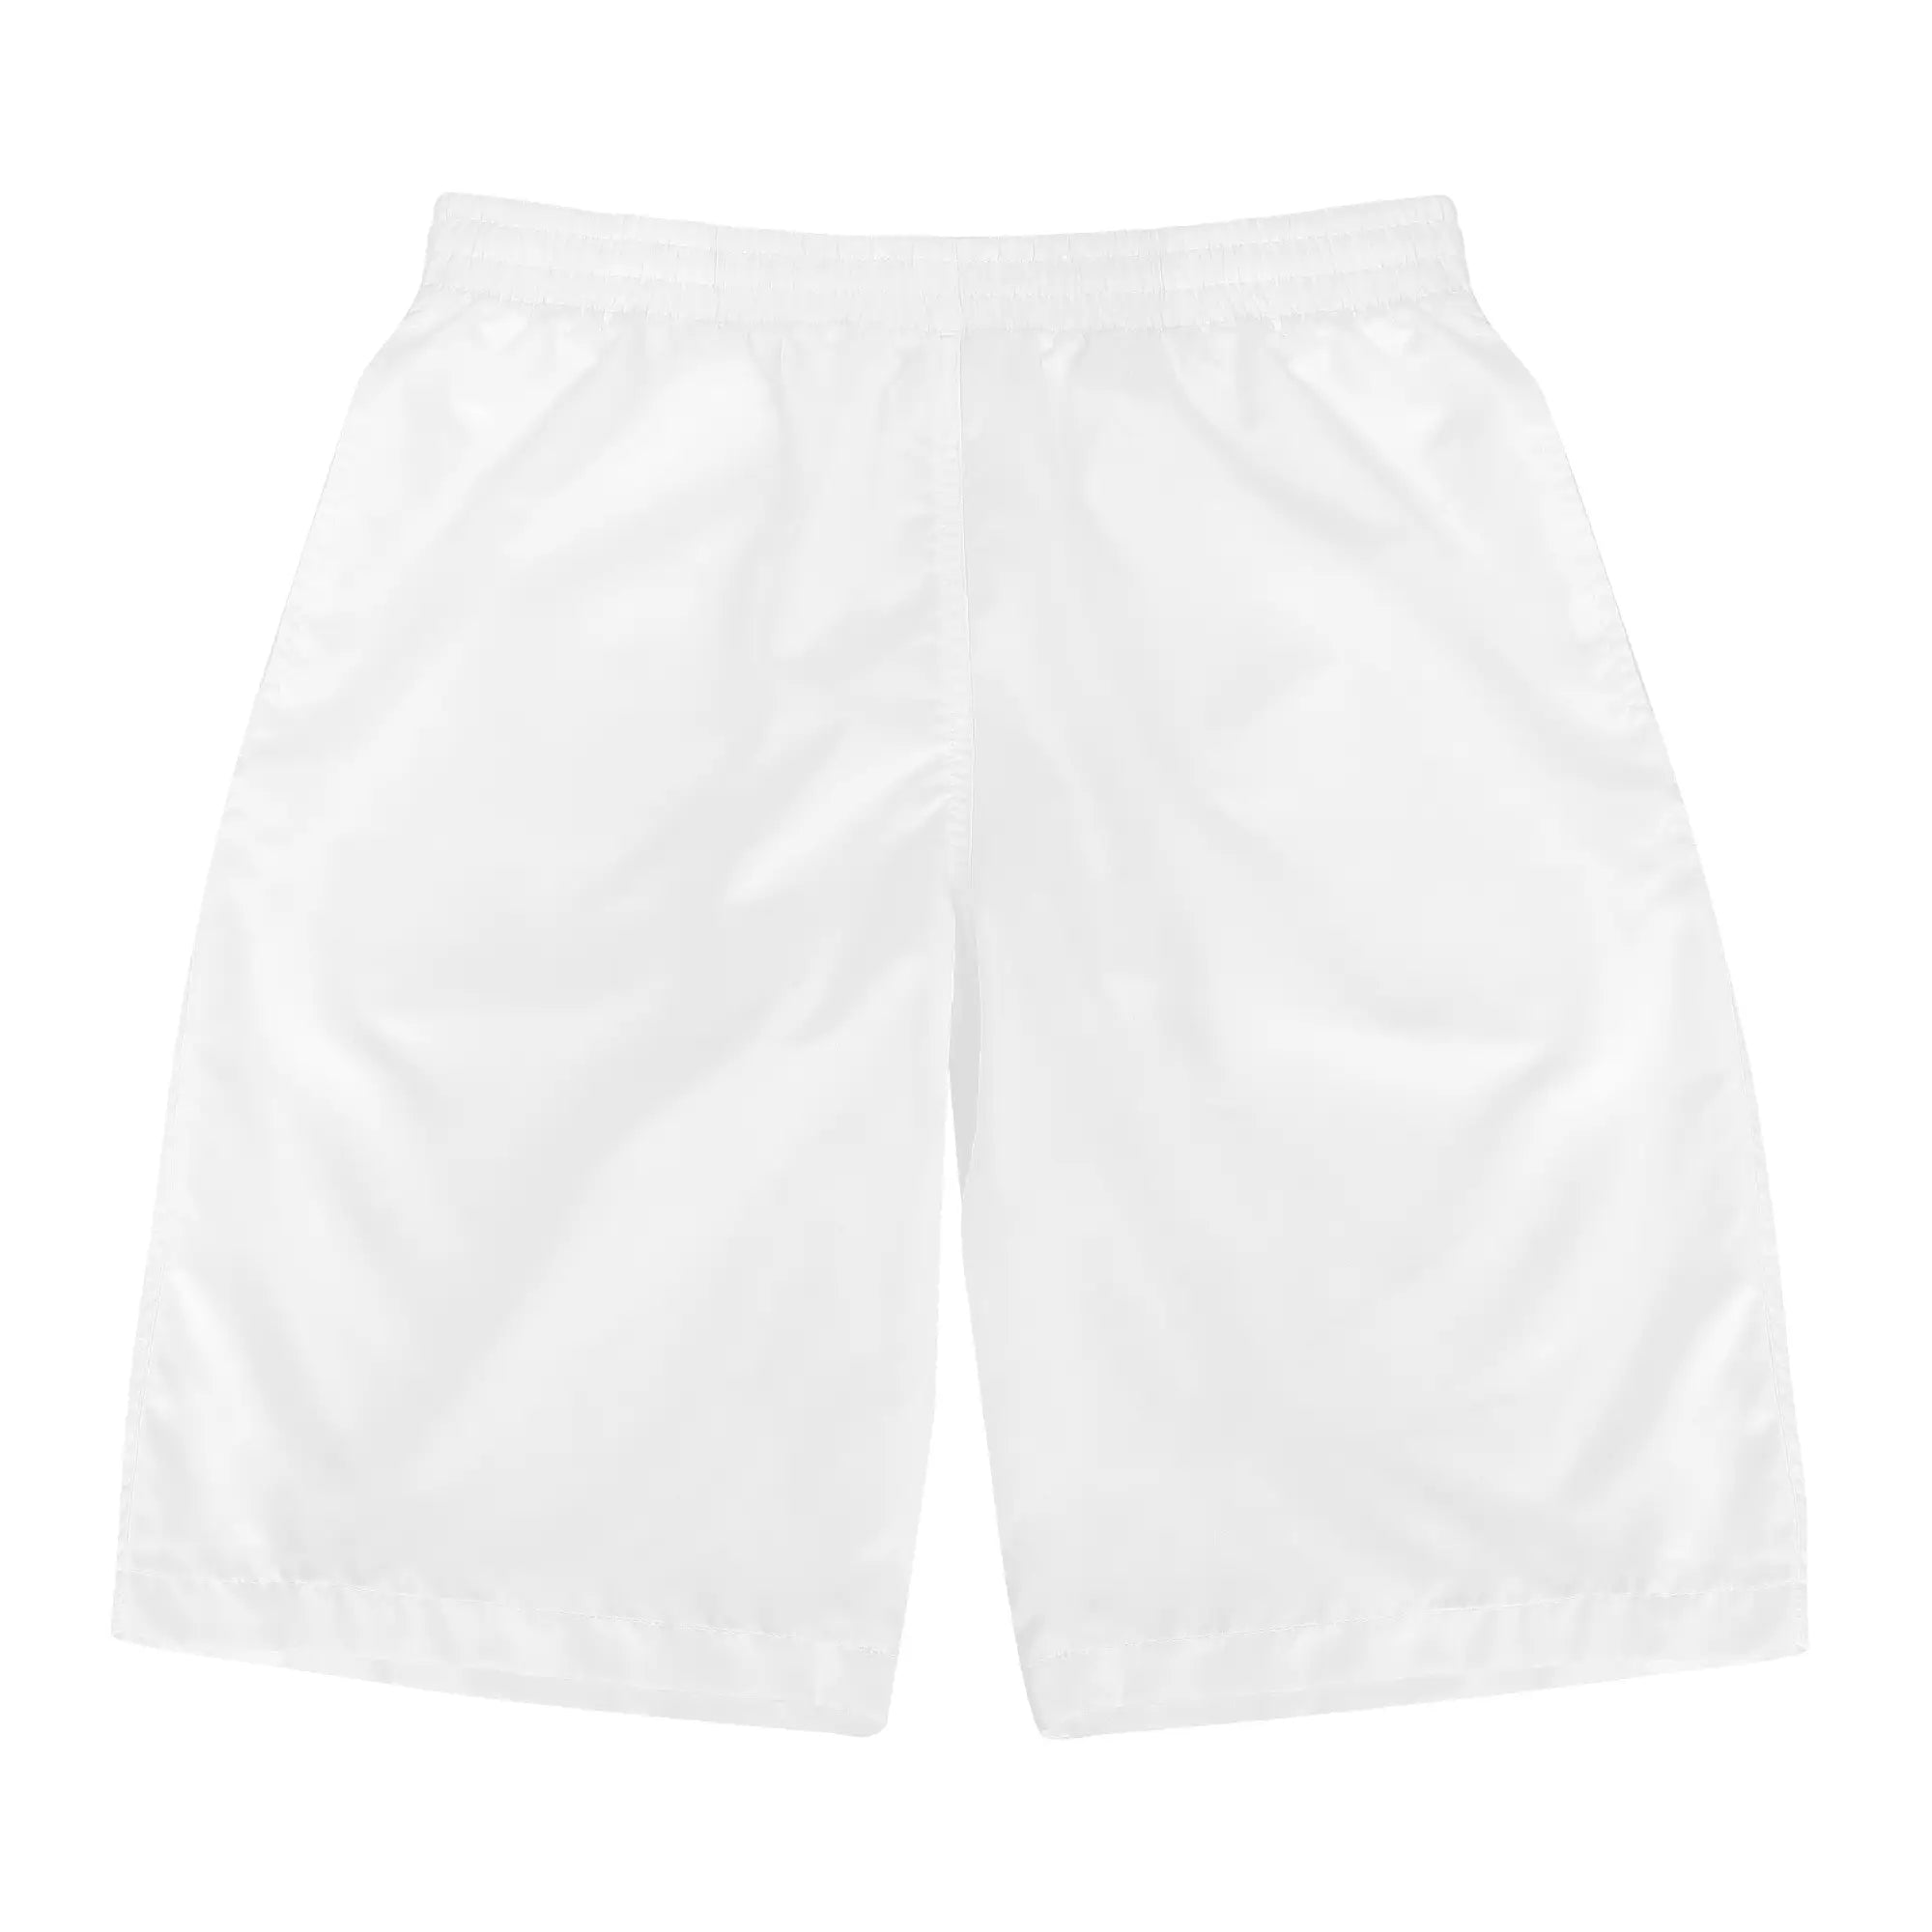 Customizable Boxer Shorts | All Over Print Board Shorts by Shoe Zero - Shoe Zero